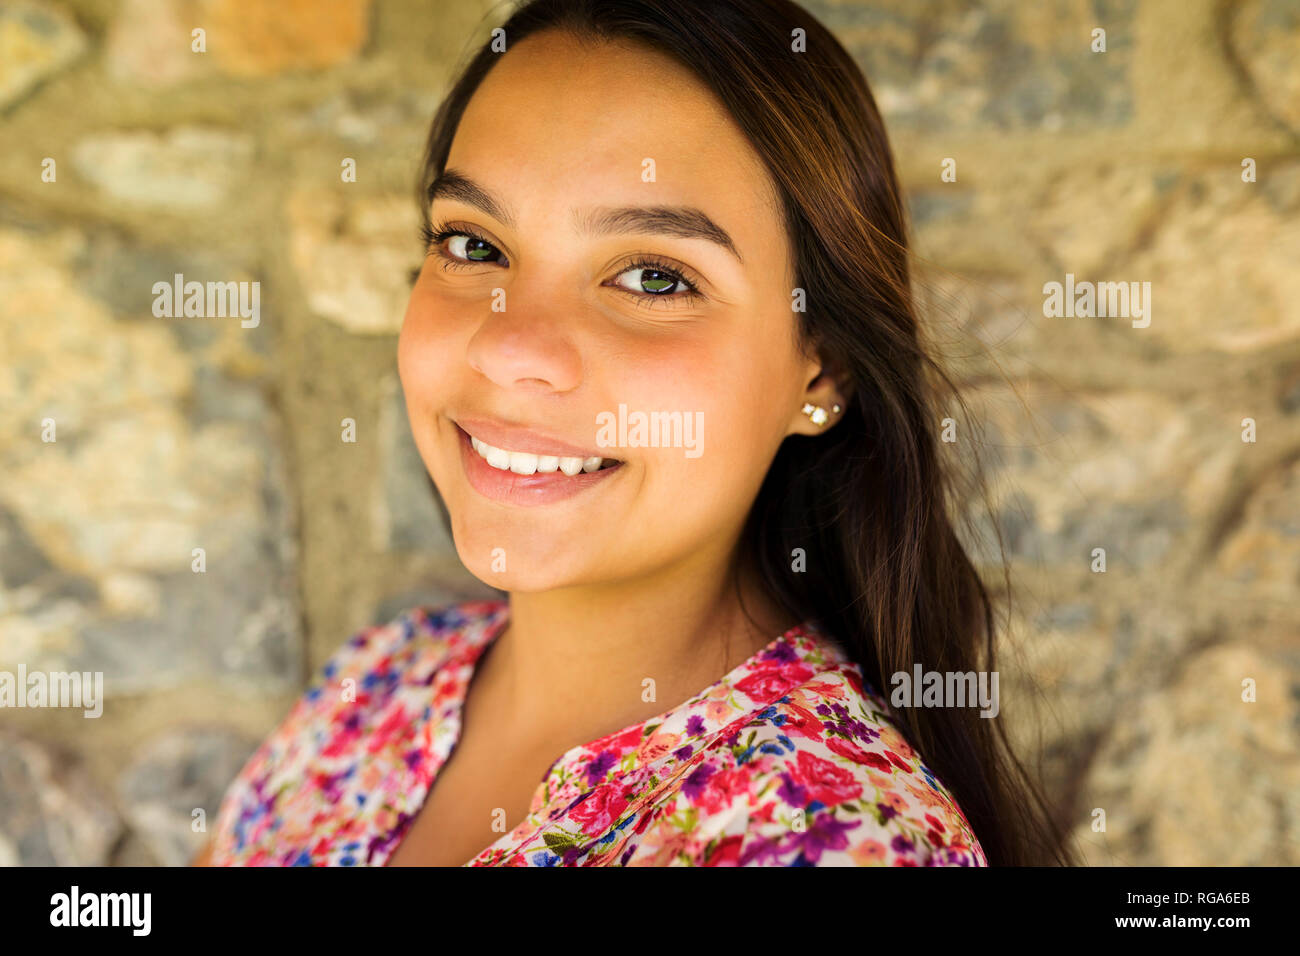 Portrait of smiling young woman Banque D'Images